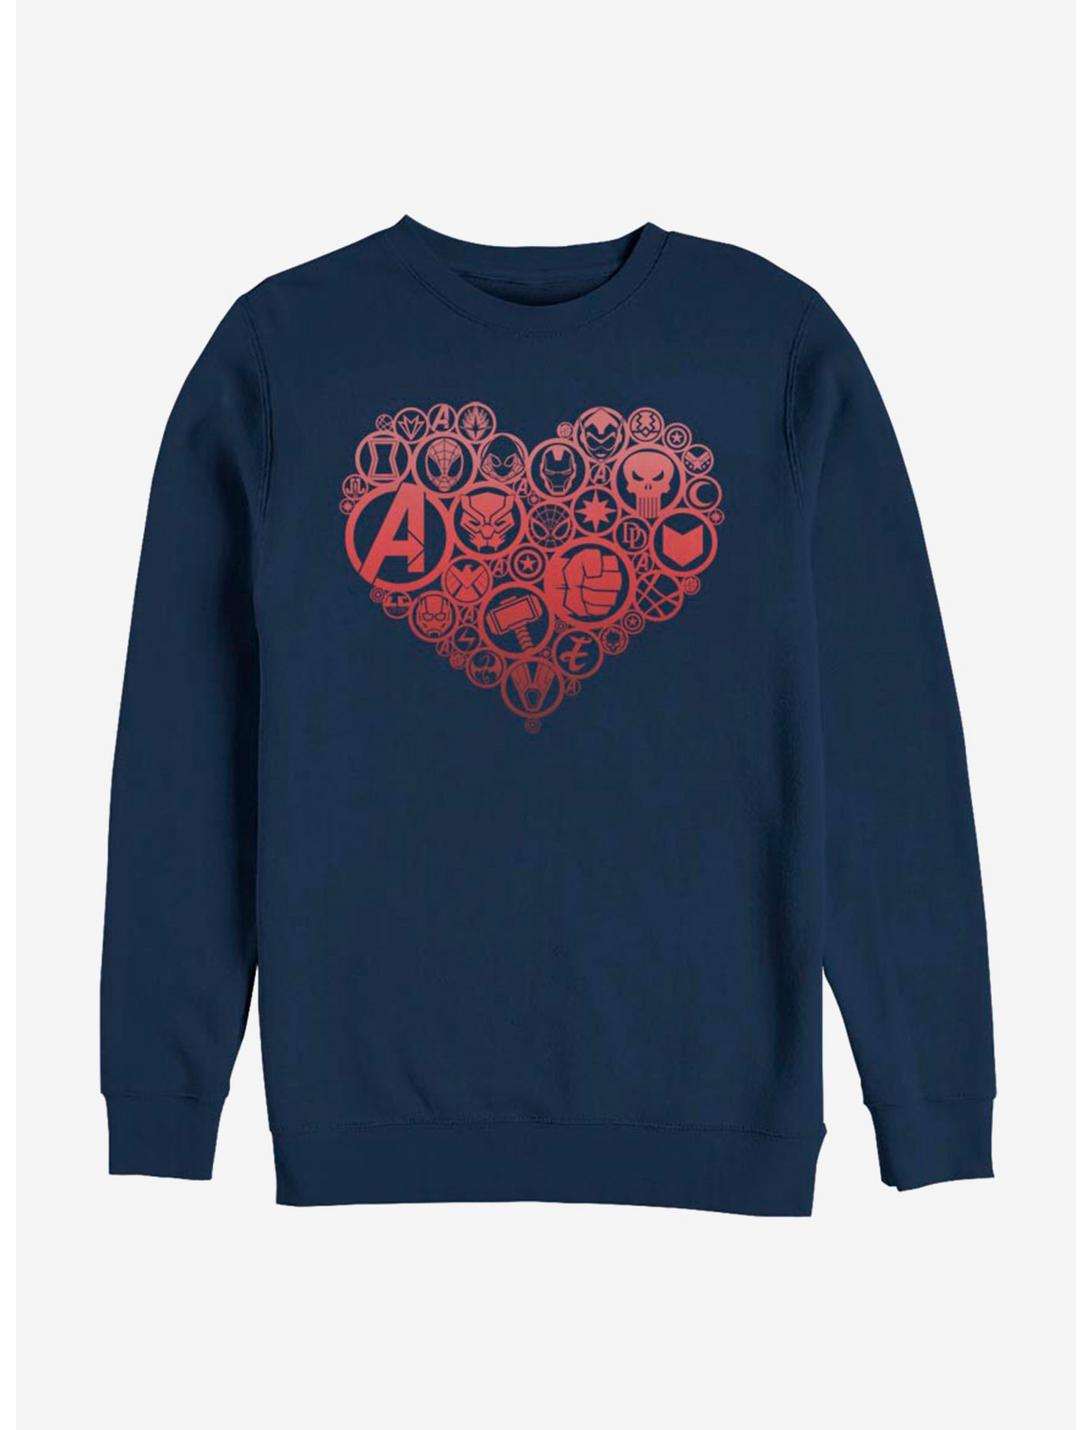 Marvel Avengers Heart Icons Sweatshirt, NAVY, hi-res